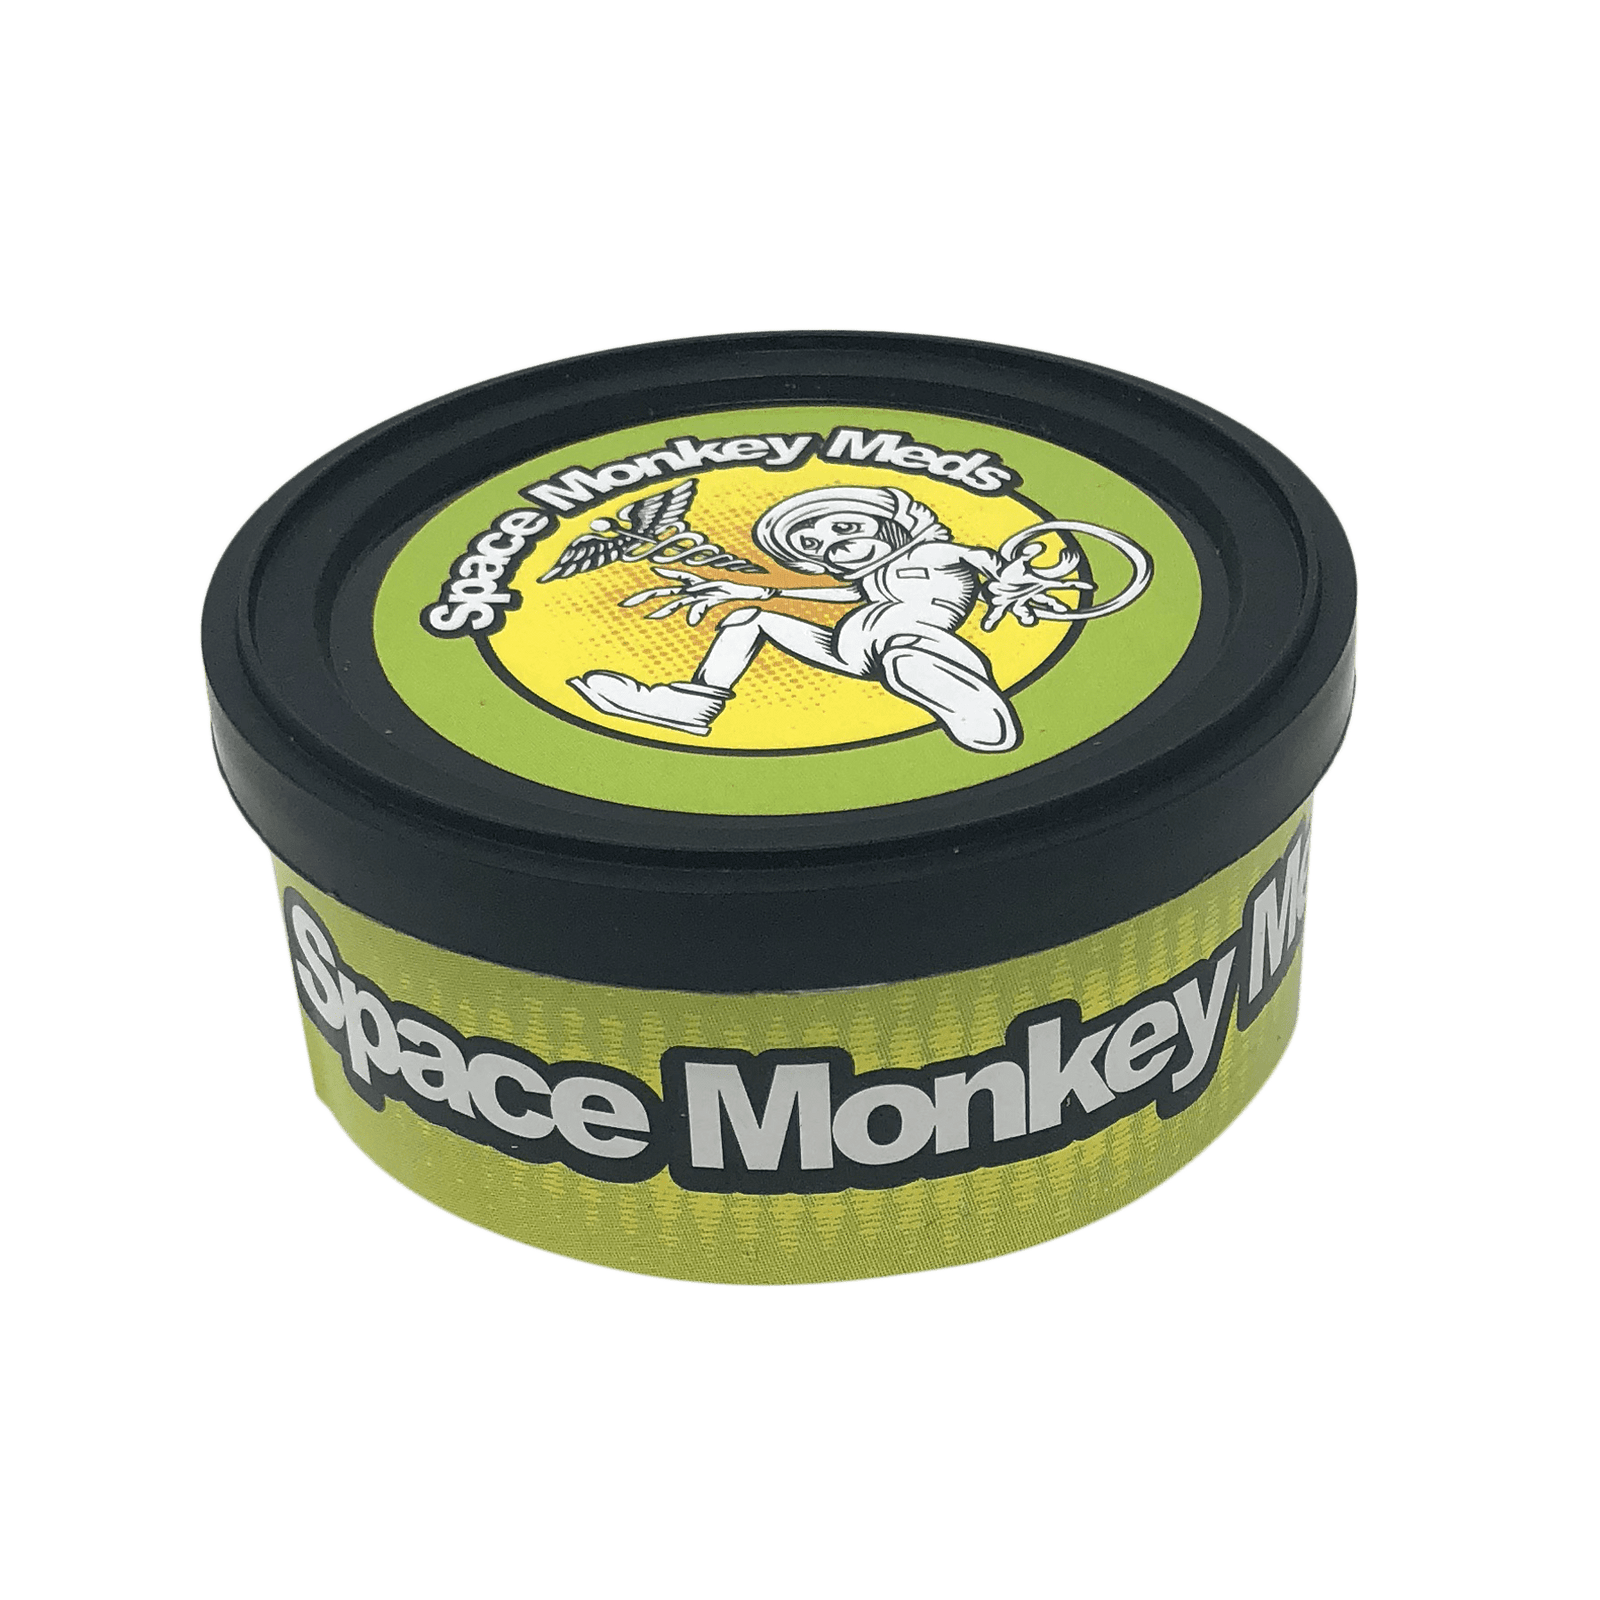 Space Monkey Meds White Buffalo - The Balloon Room